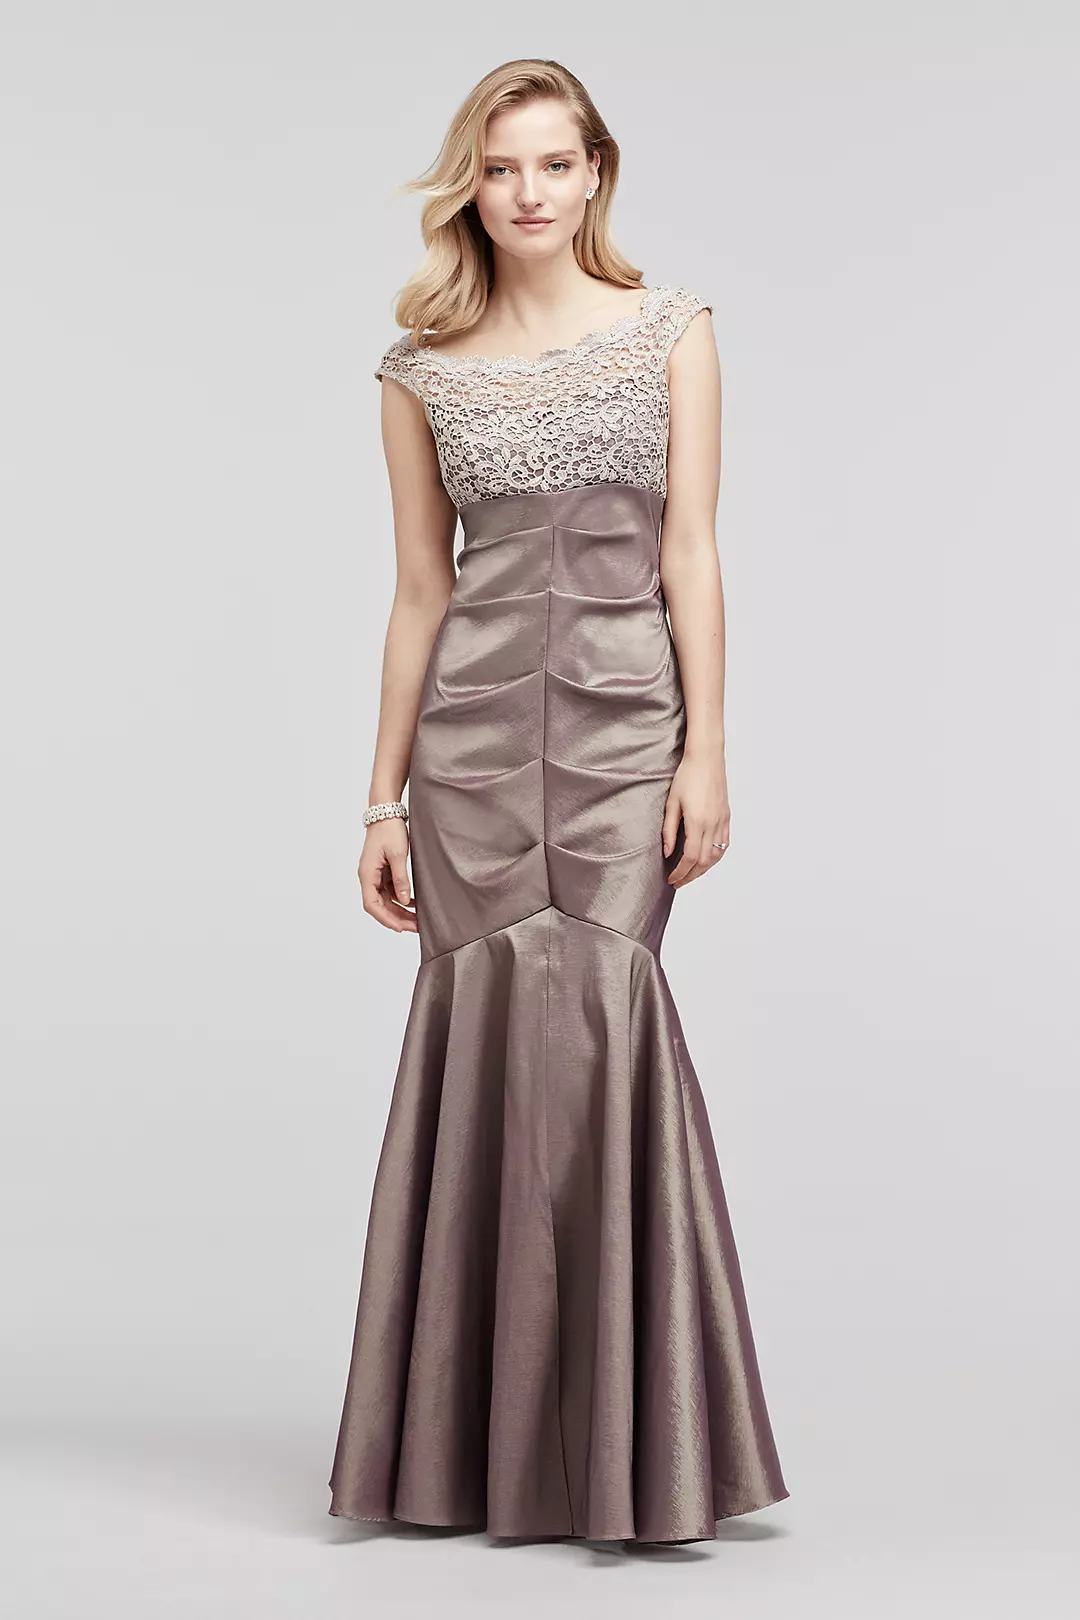 Cap Sleeve Taffeta Dress with Glitter Lace Bodice Image